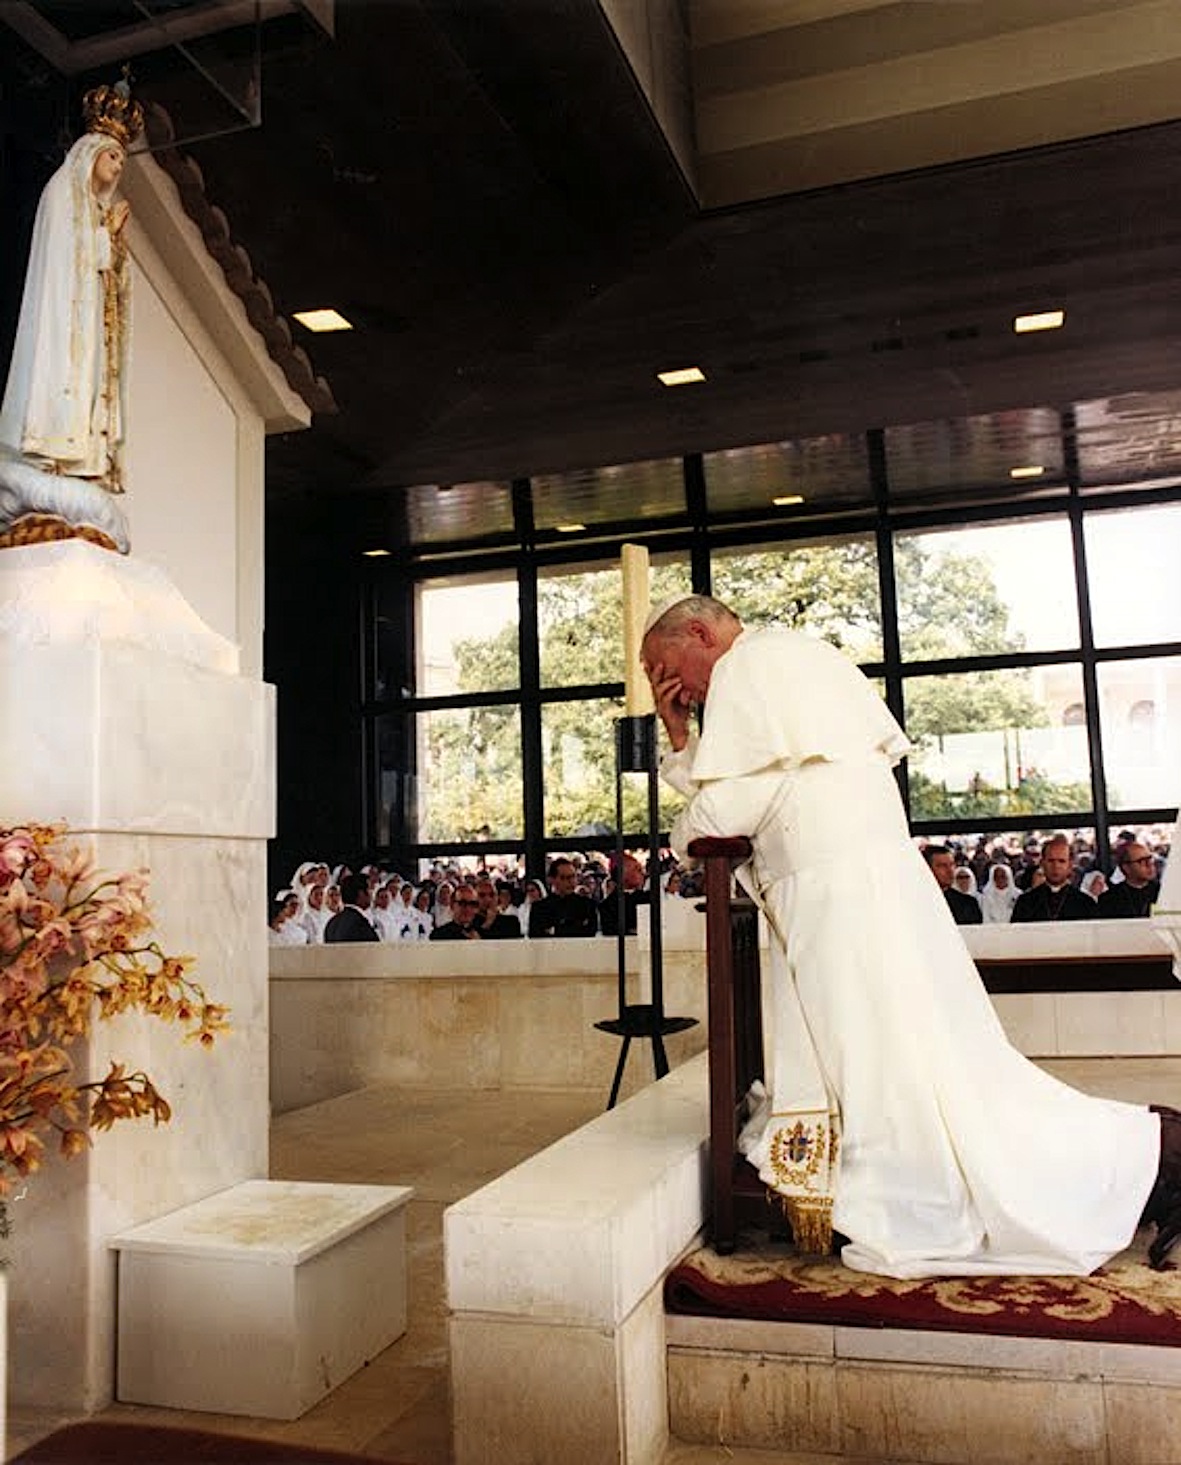 Pope John Paul II and Fatima